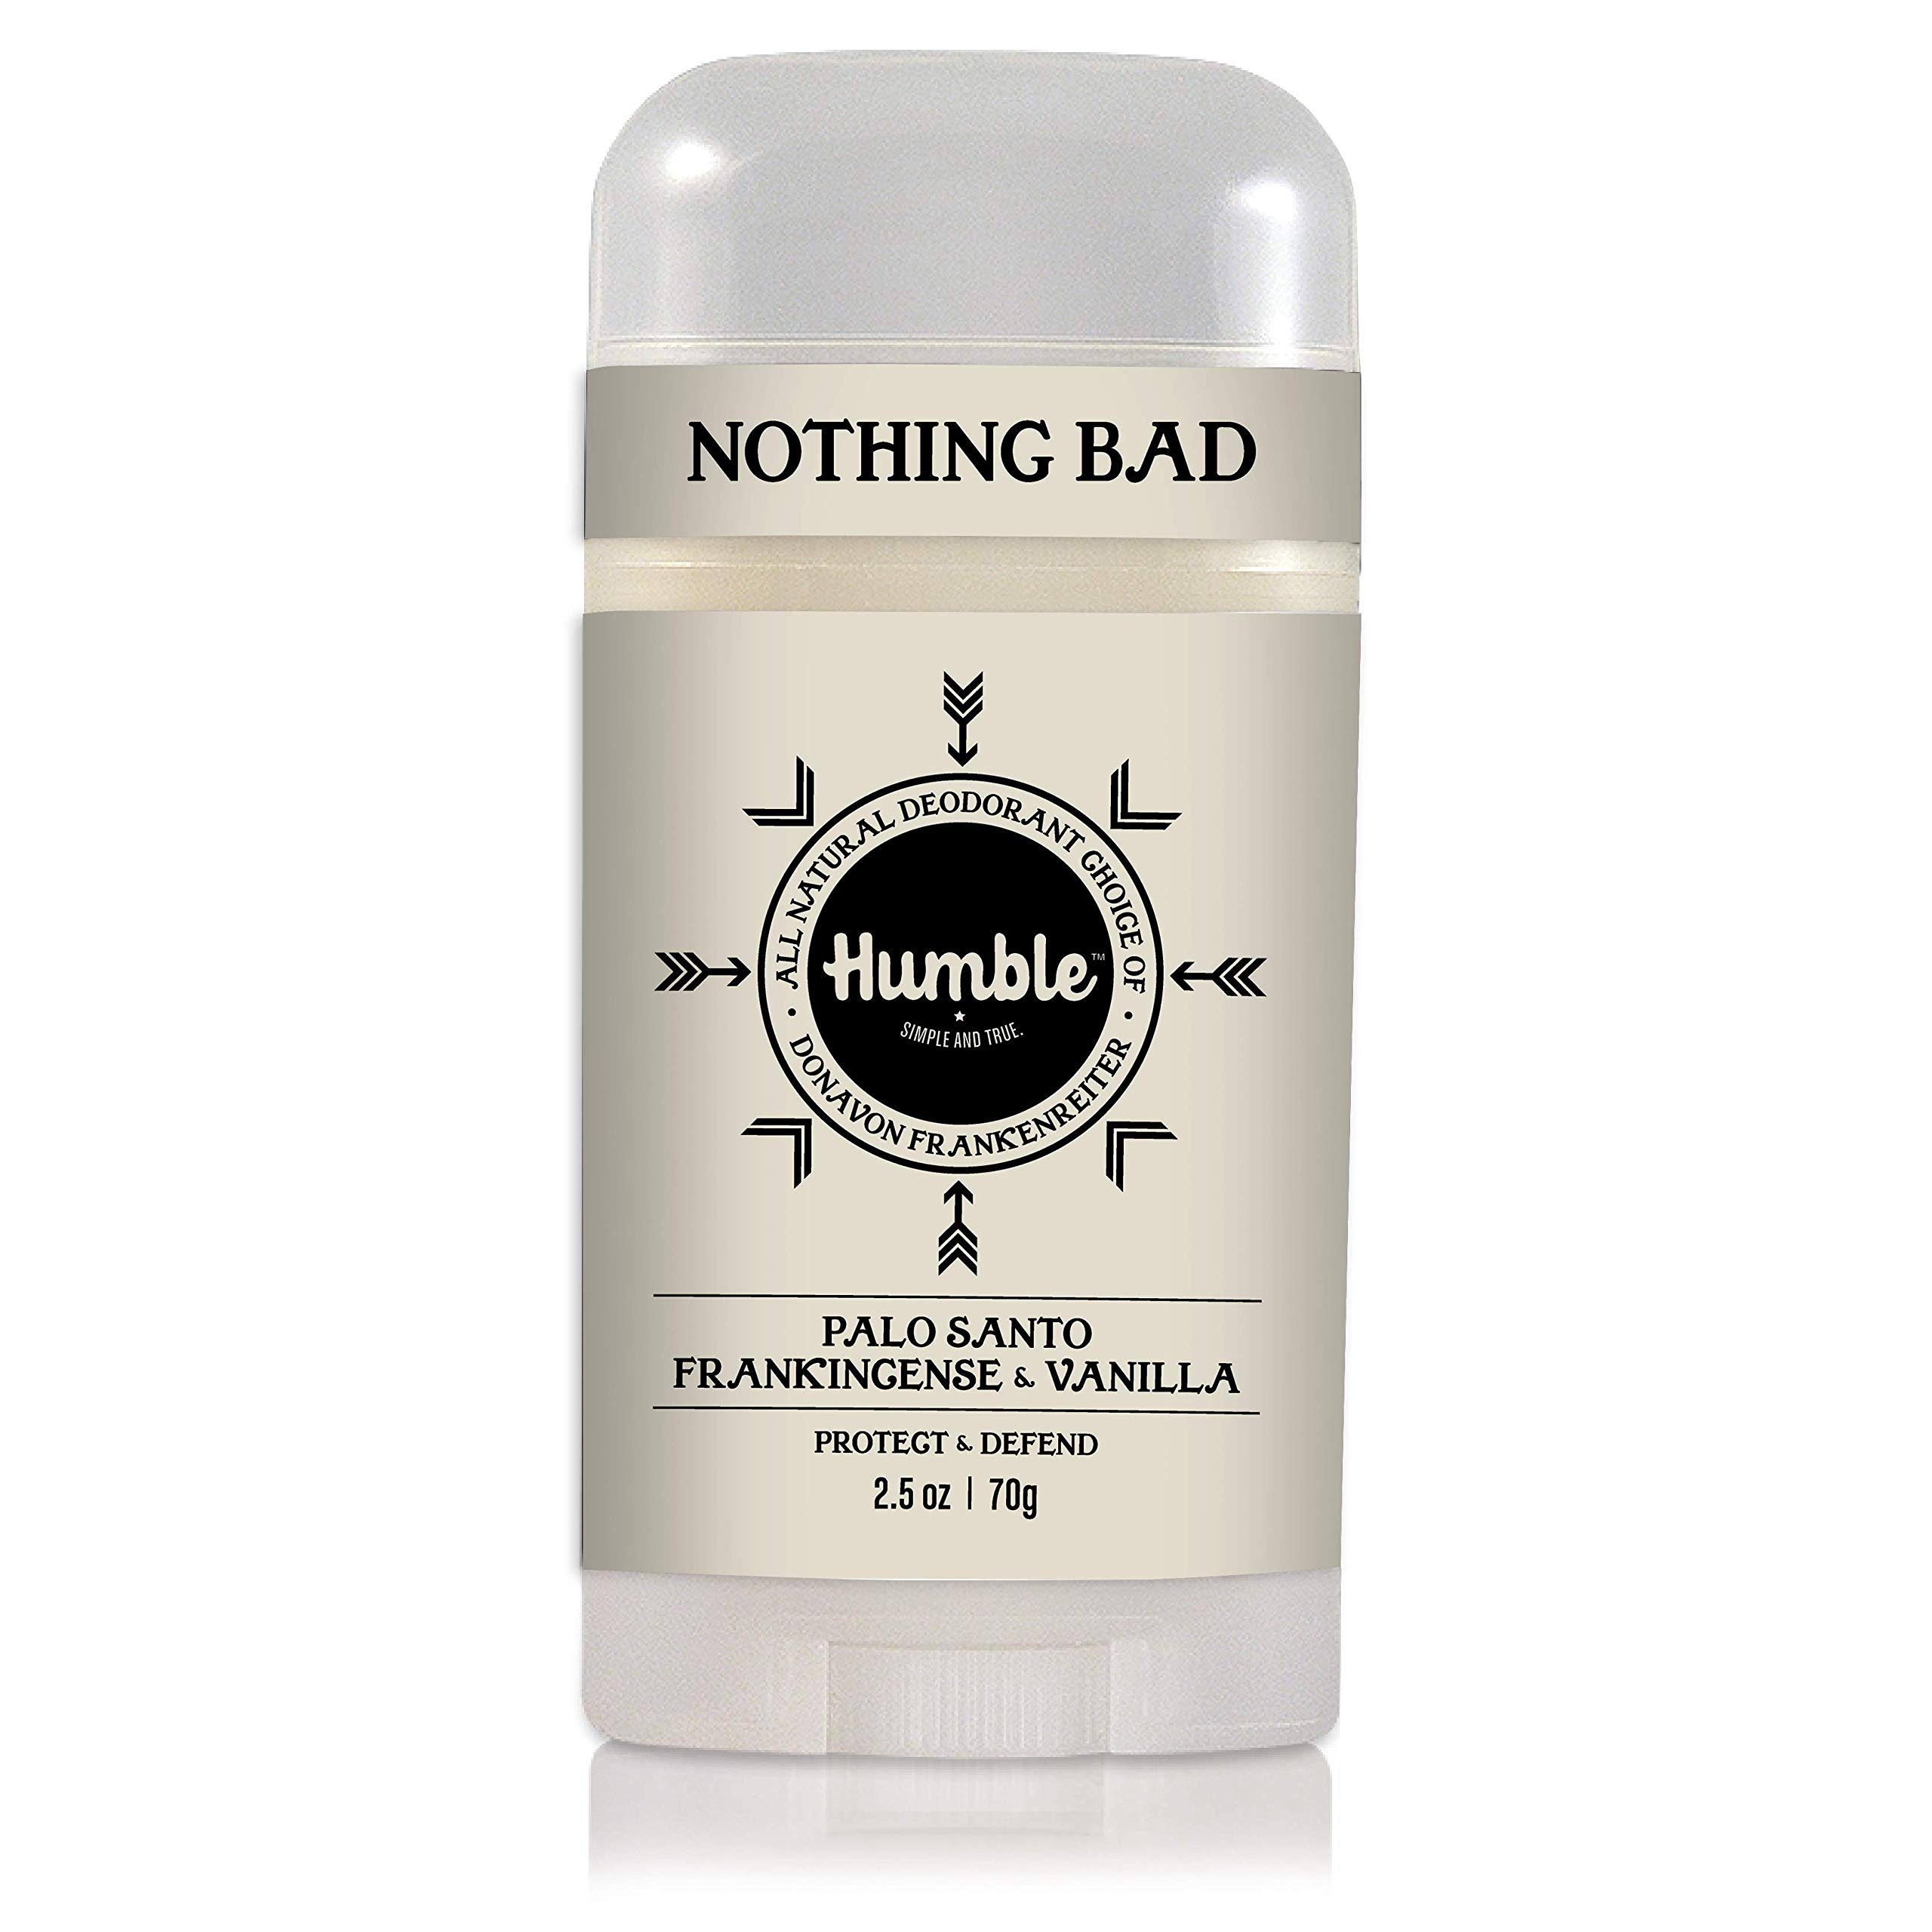 Humble Nothing Bad Deodorant, Original Formula, Palo Santo & Frankincense - 2.5 oz